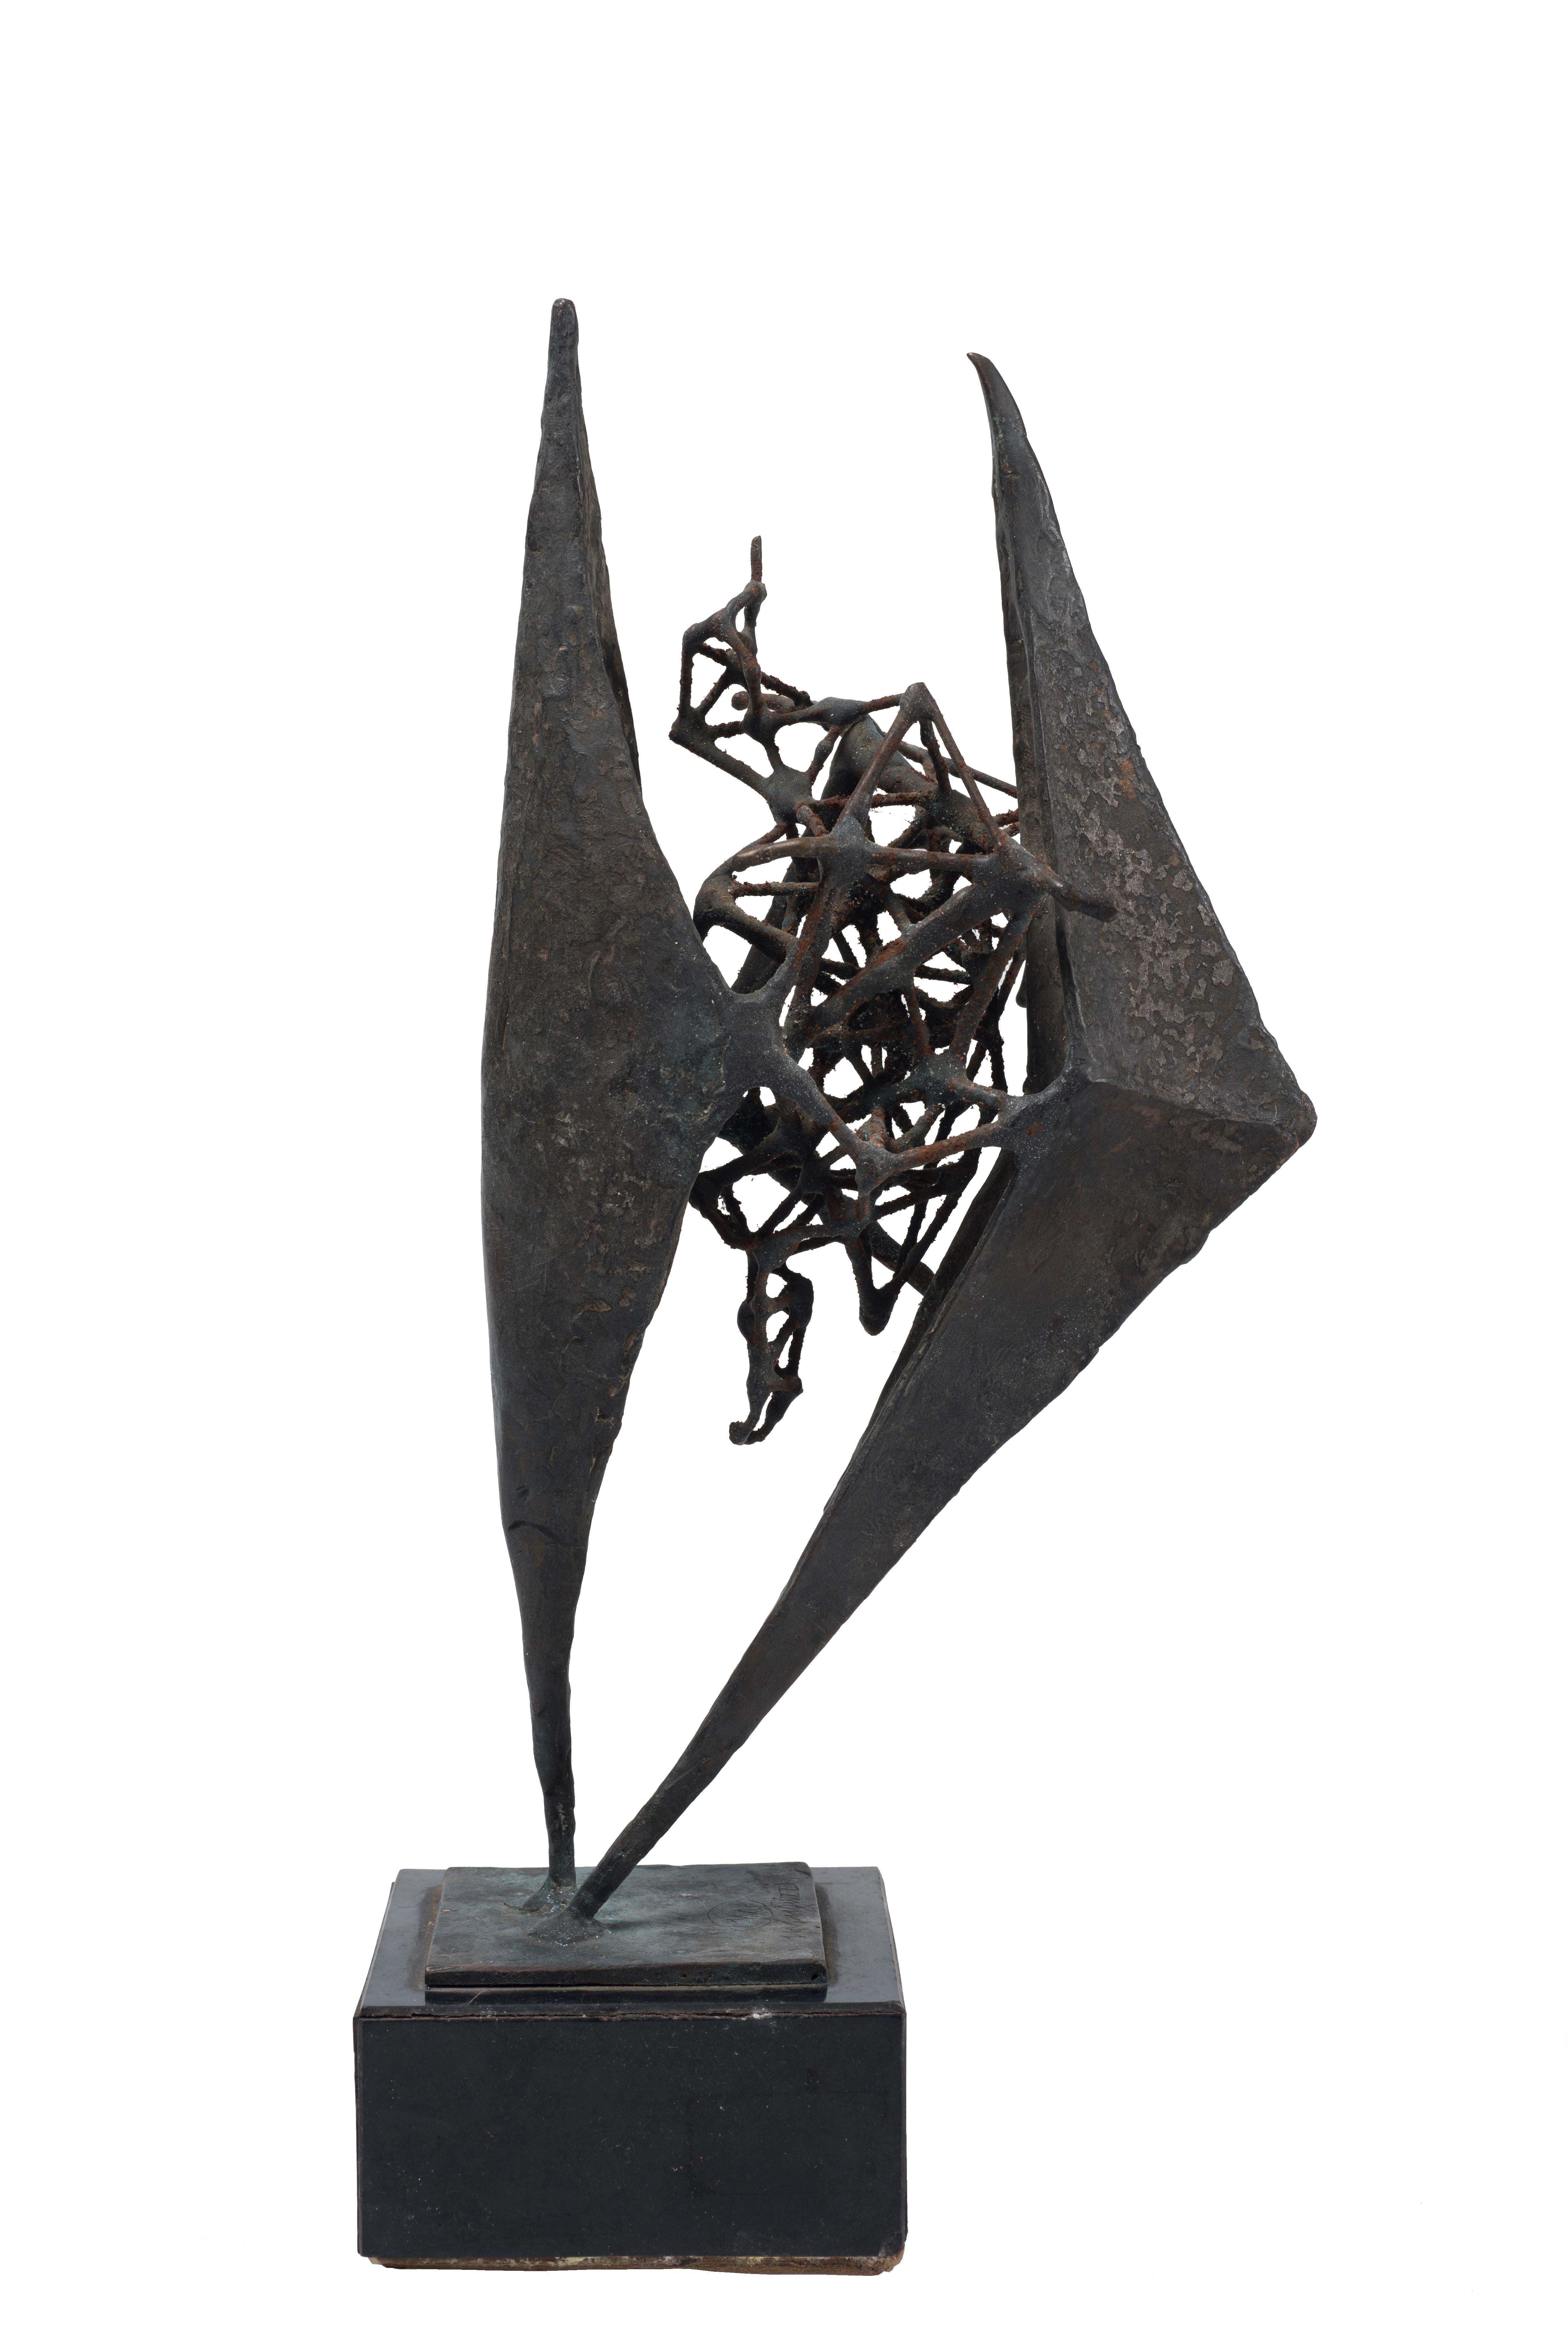 Lovers - Bronze Sculpture by Luciano Minguzzi - 1950s